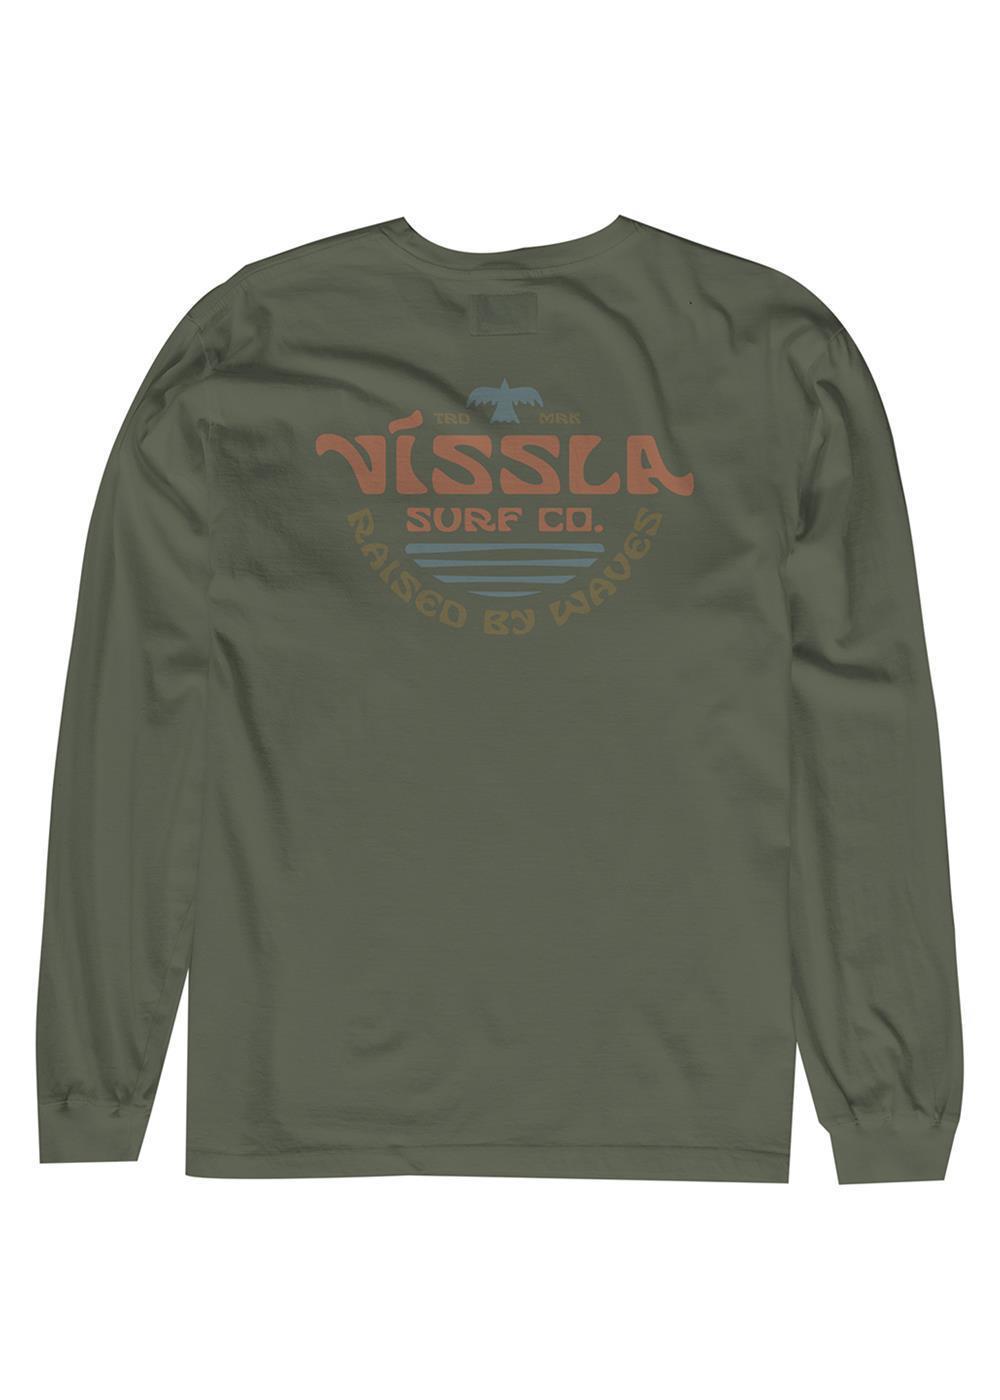 Vissla West Winds LS PKT Tee (Army) - KS Boardriders Surf Shop